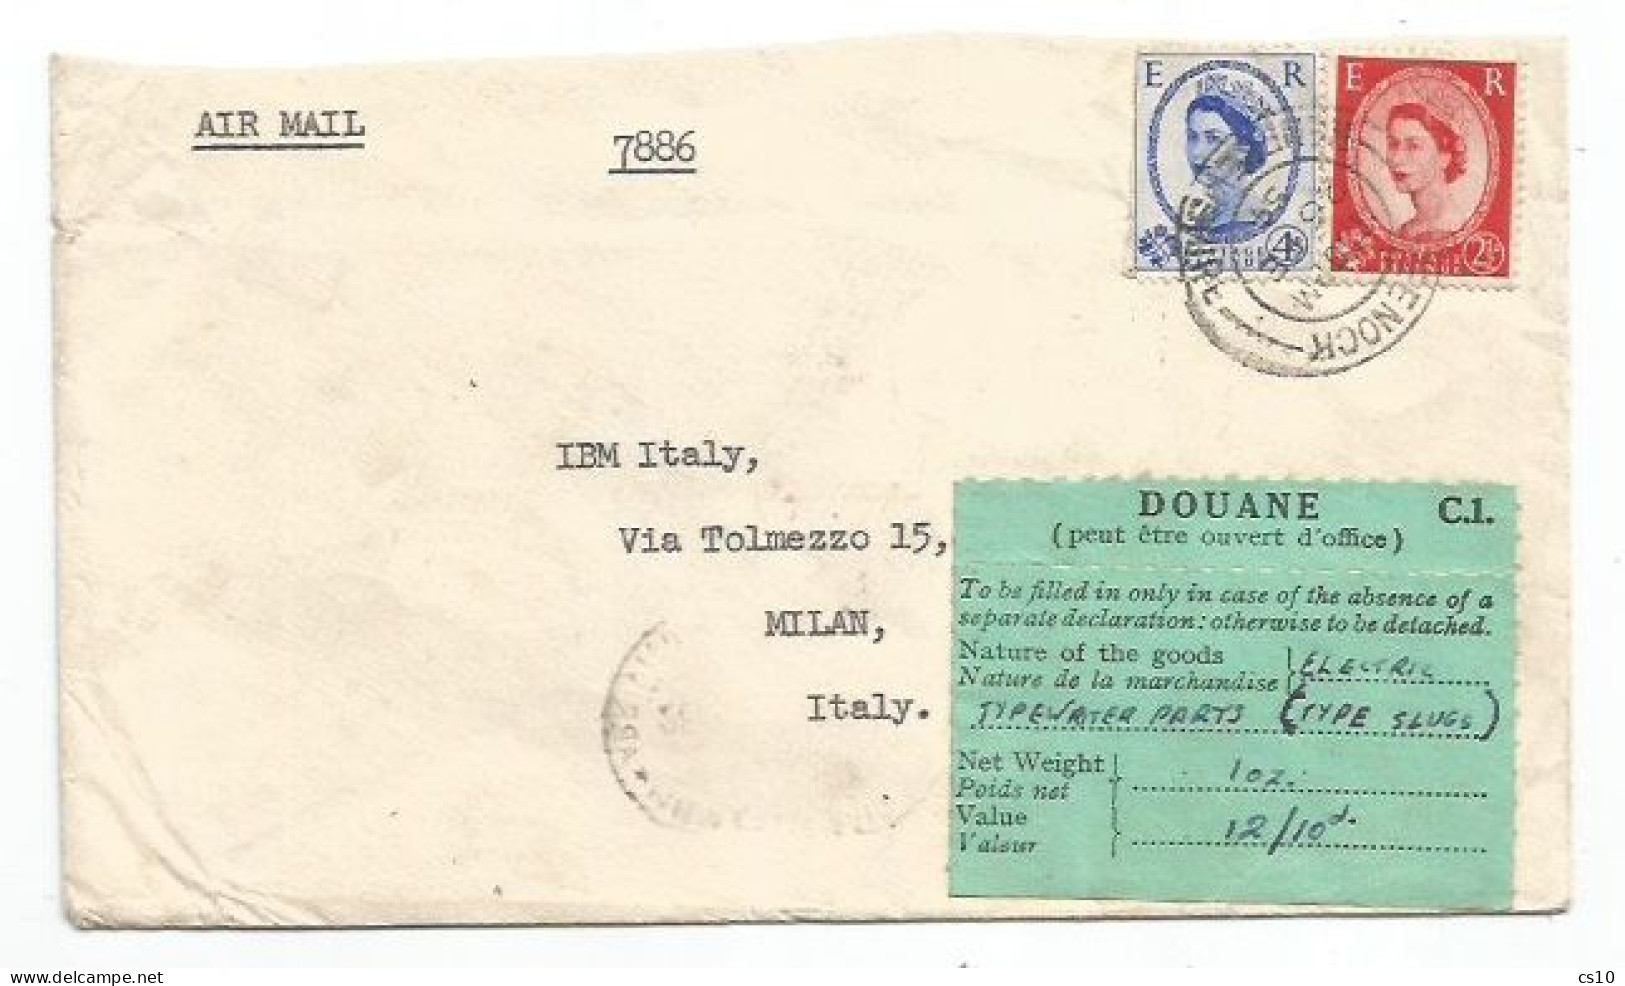 UK Britain Douane Customs Zoll Dogana Label C1 X Typewriter Parts Airmail CV UK 1954 To Italy C/o IBM Corporation - Poststempel